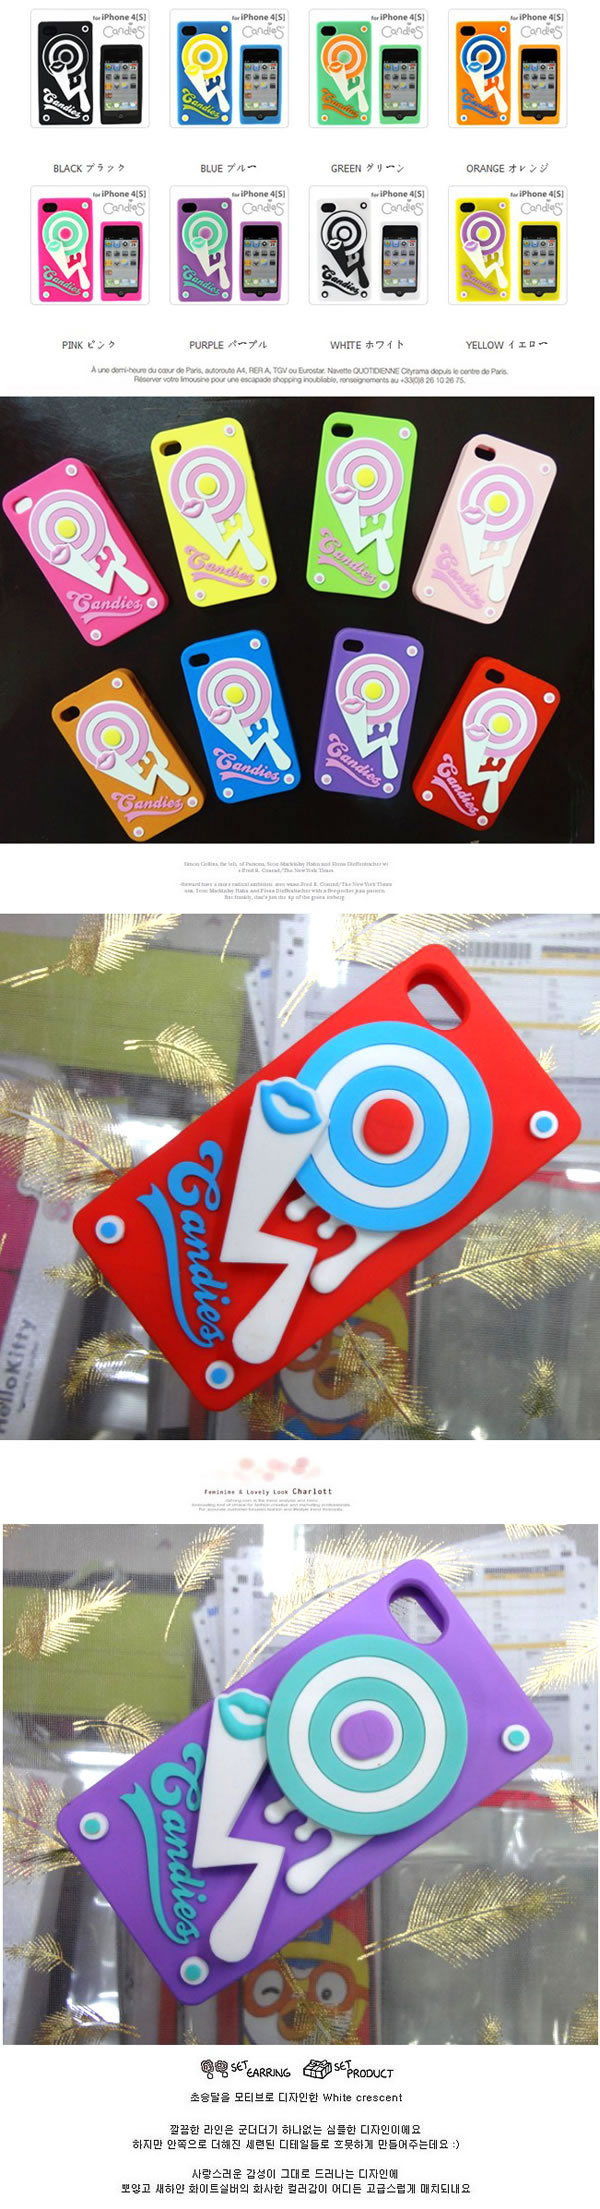 Caspari Color will be random Sweet Lollipop Design Silicon Iphone 4 4s,Iphone 4/4s